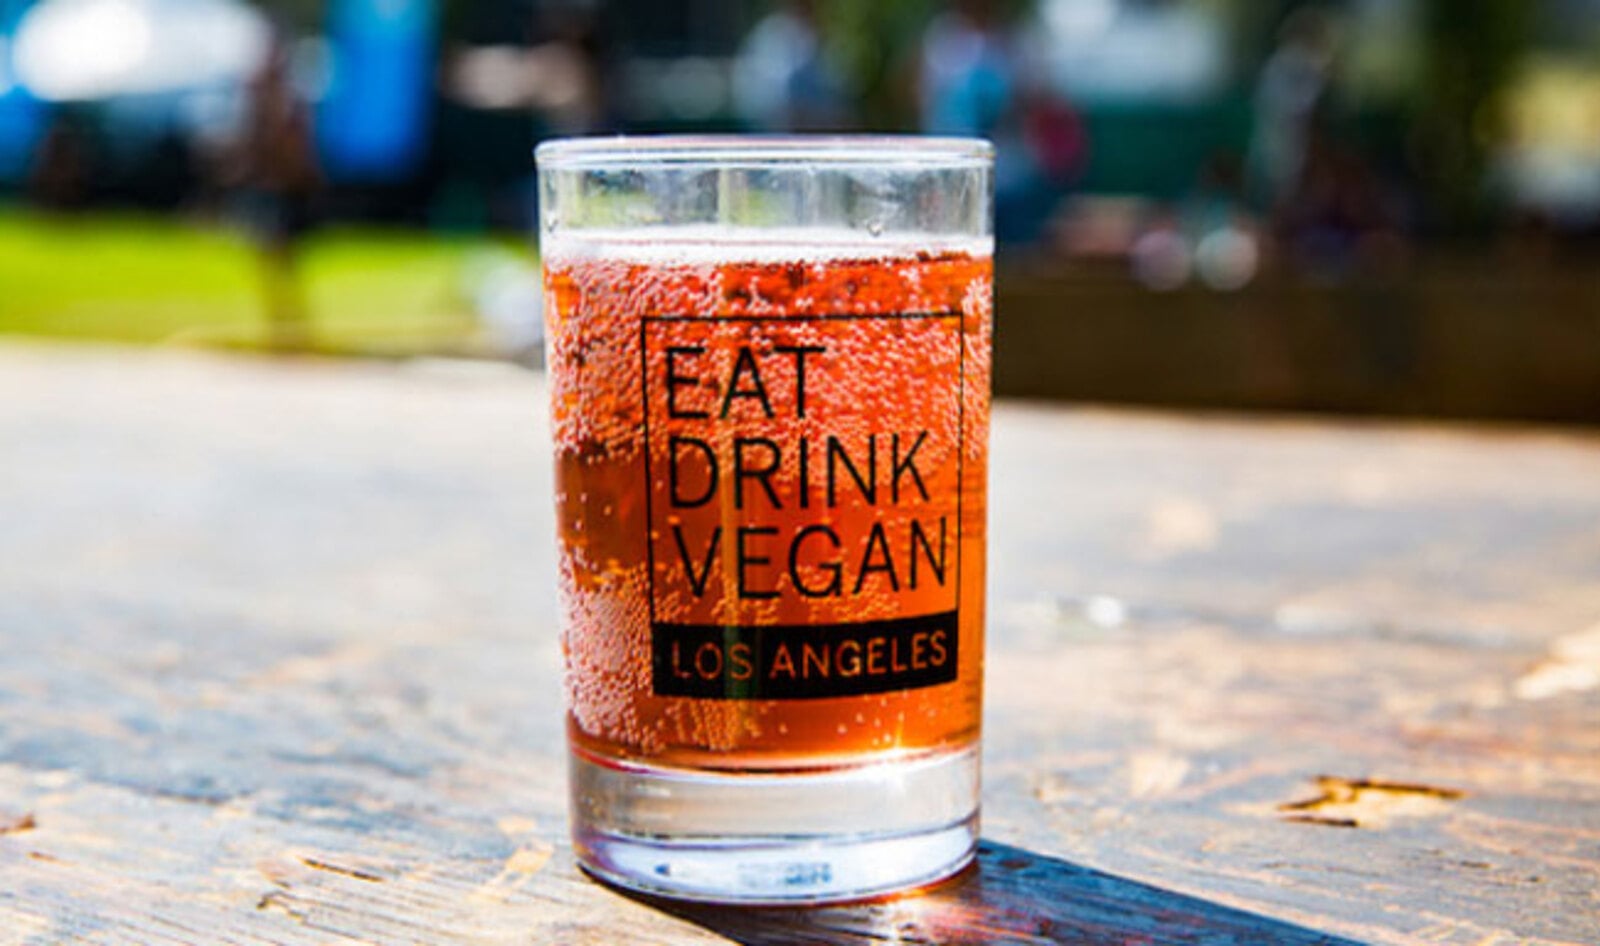 LA’s Eat Drink Vegan Festival Heads to London&nbsp;